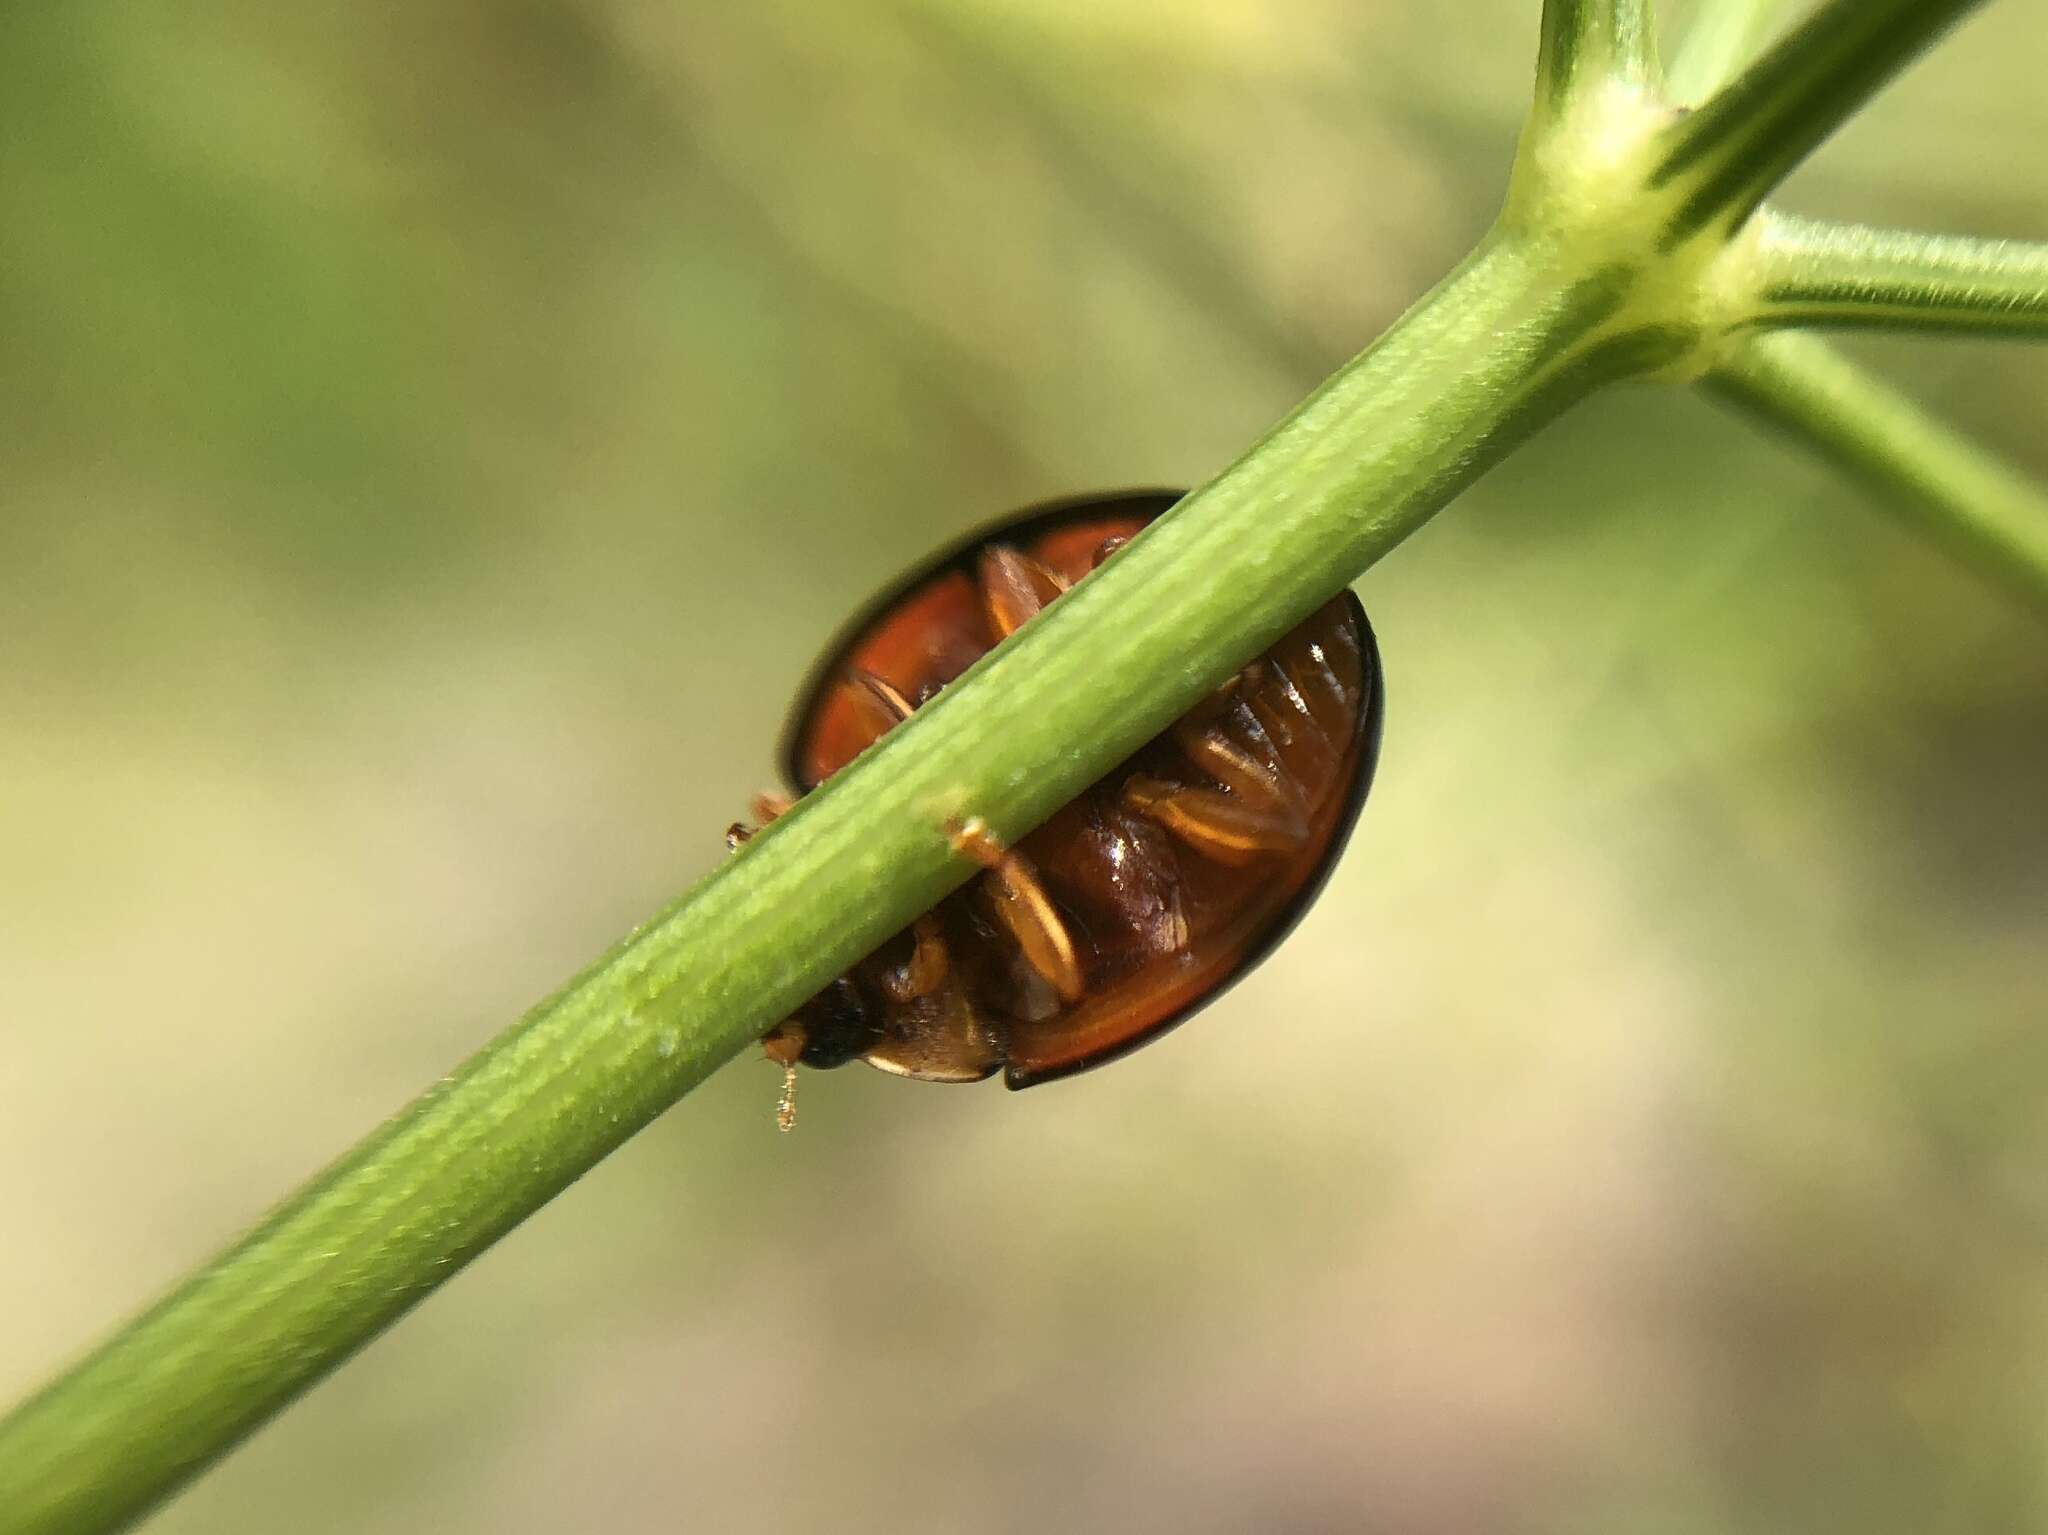 Image of Six-spotted Zigzag Ladybird